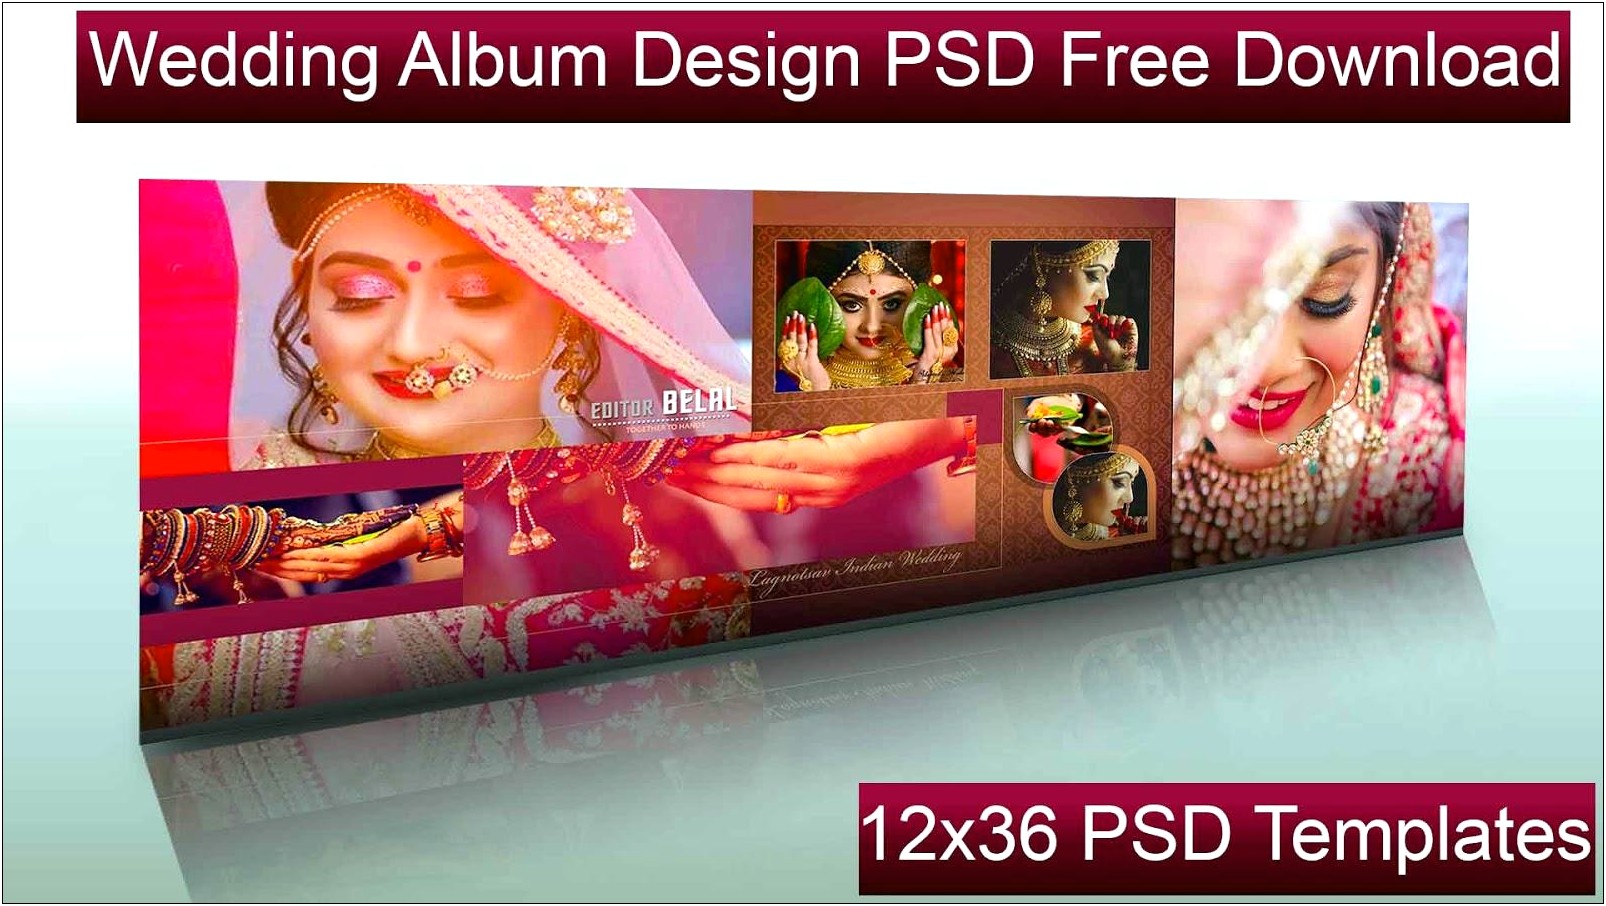 Adobe Photoshop Wedding Album Templates Free